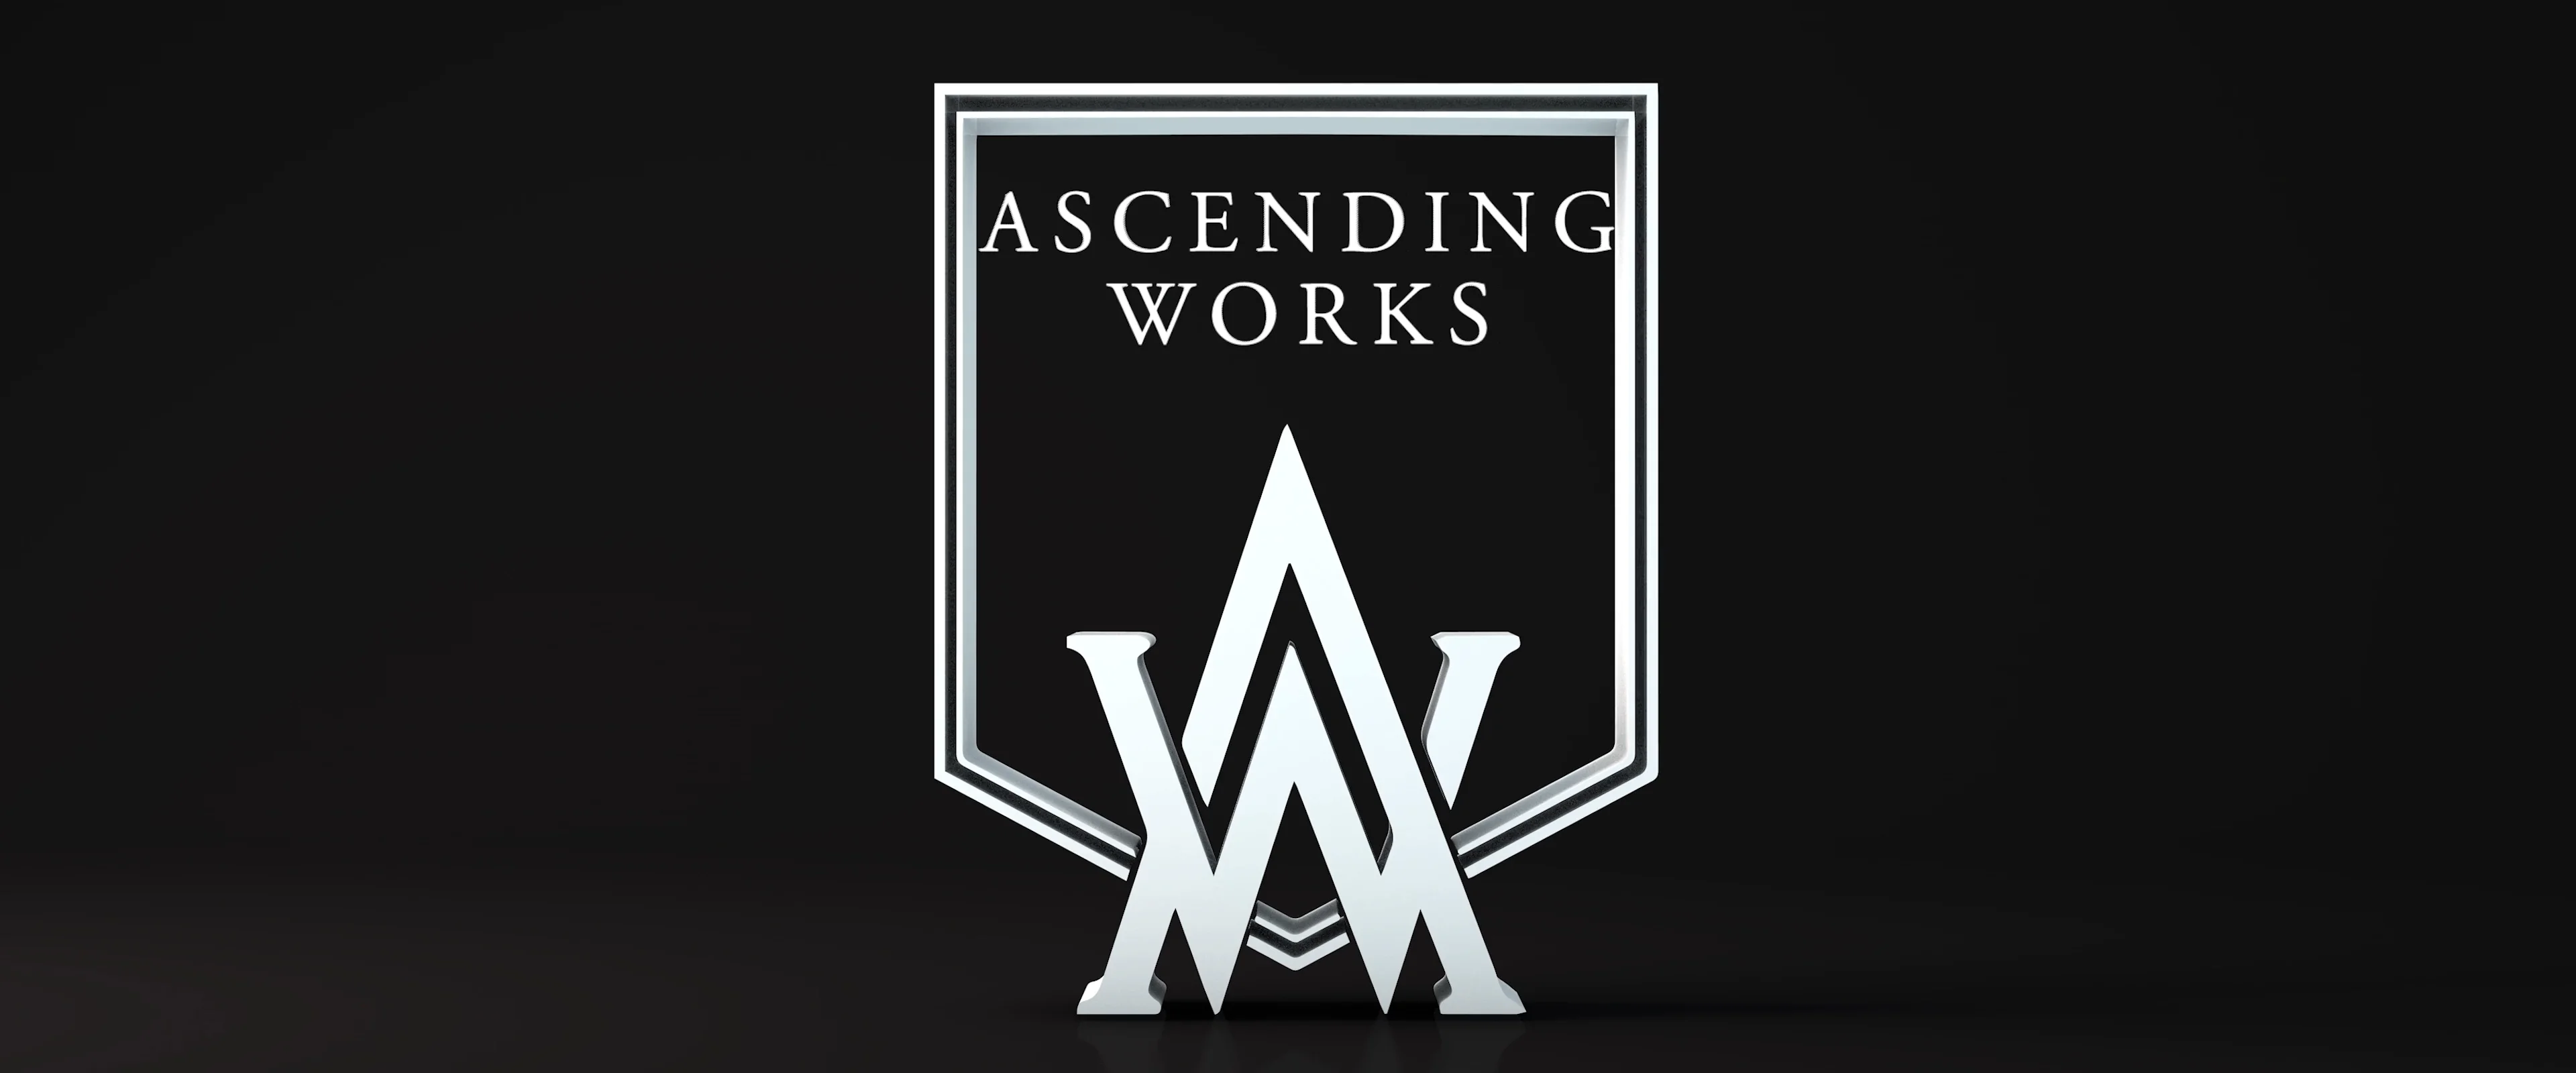 2018 Ascending Works Auto Reel on Vimeo